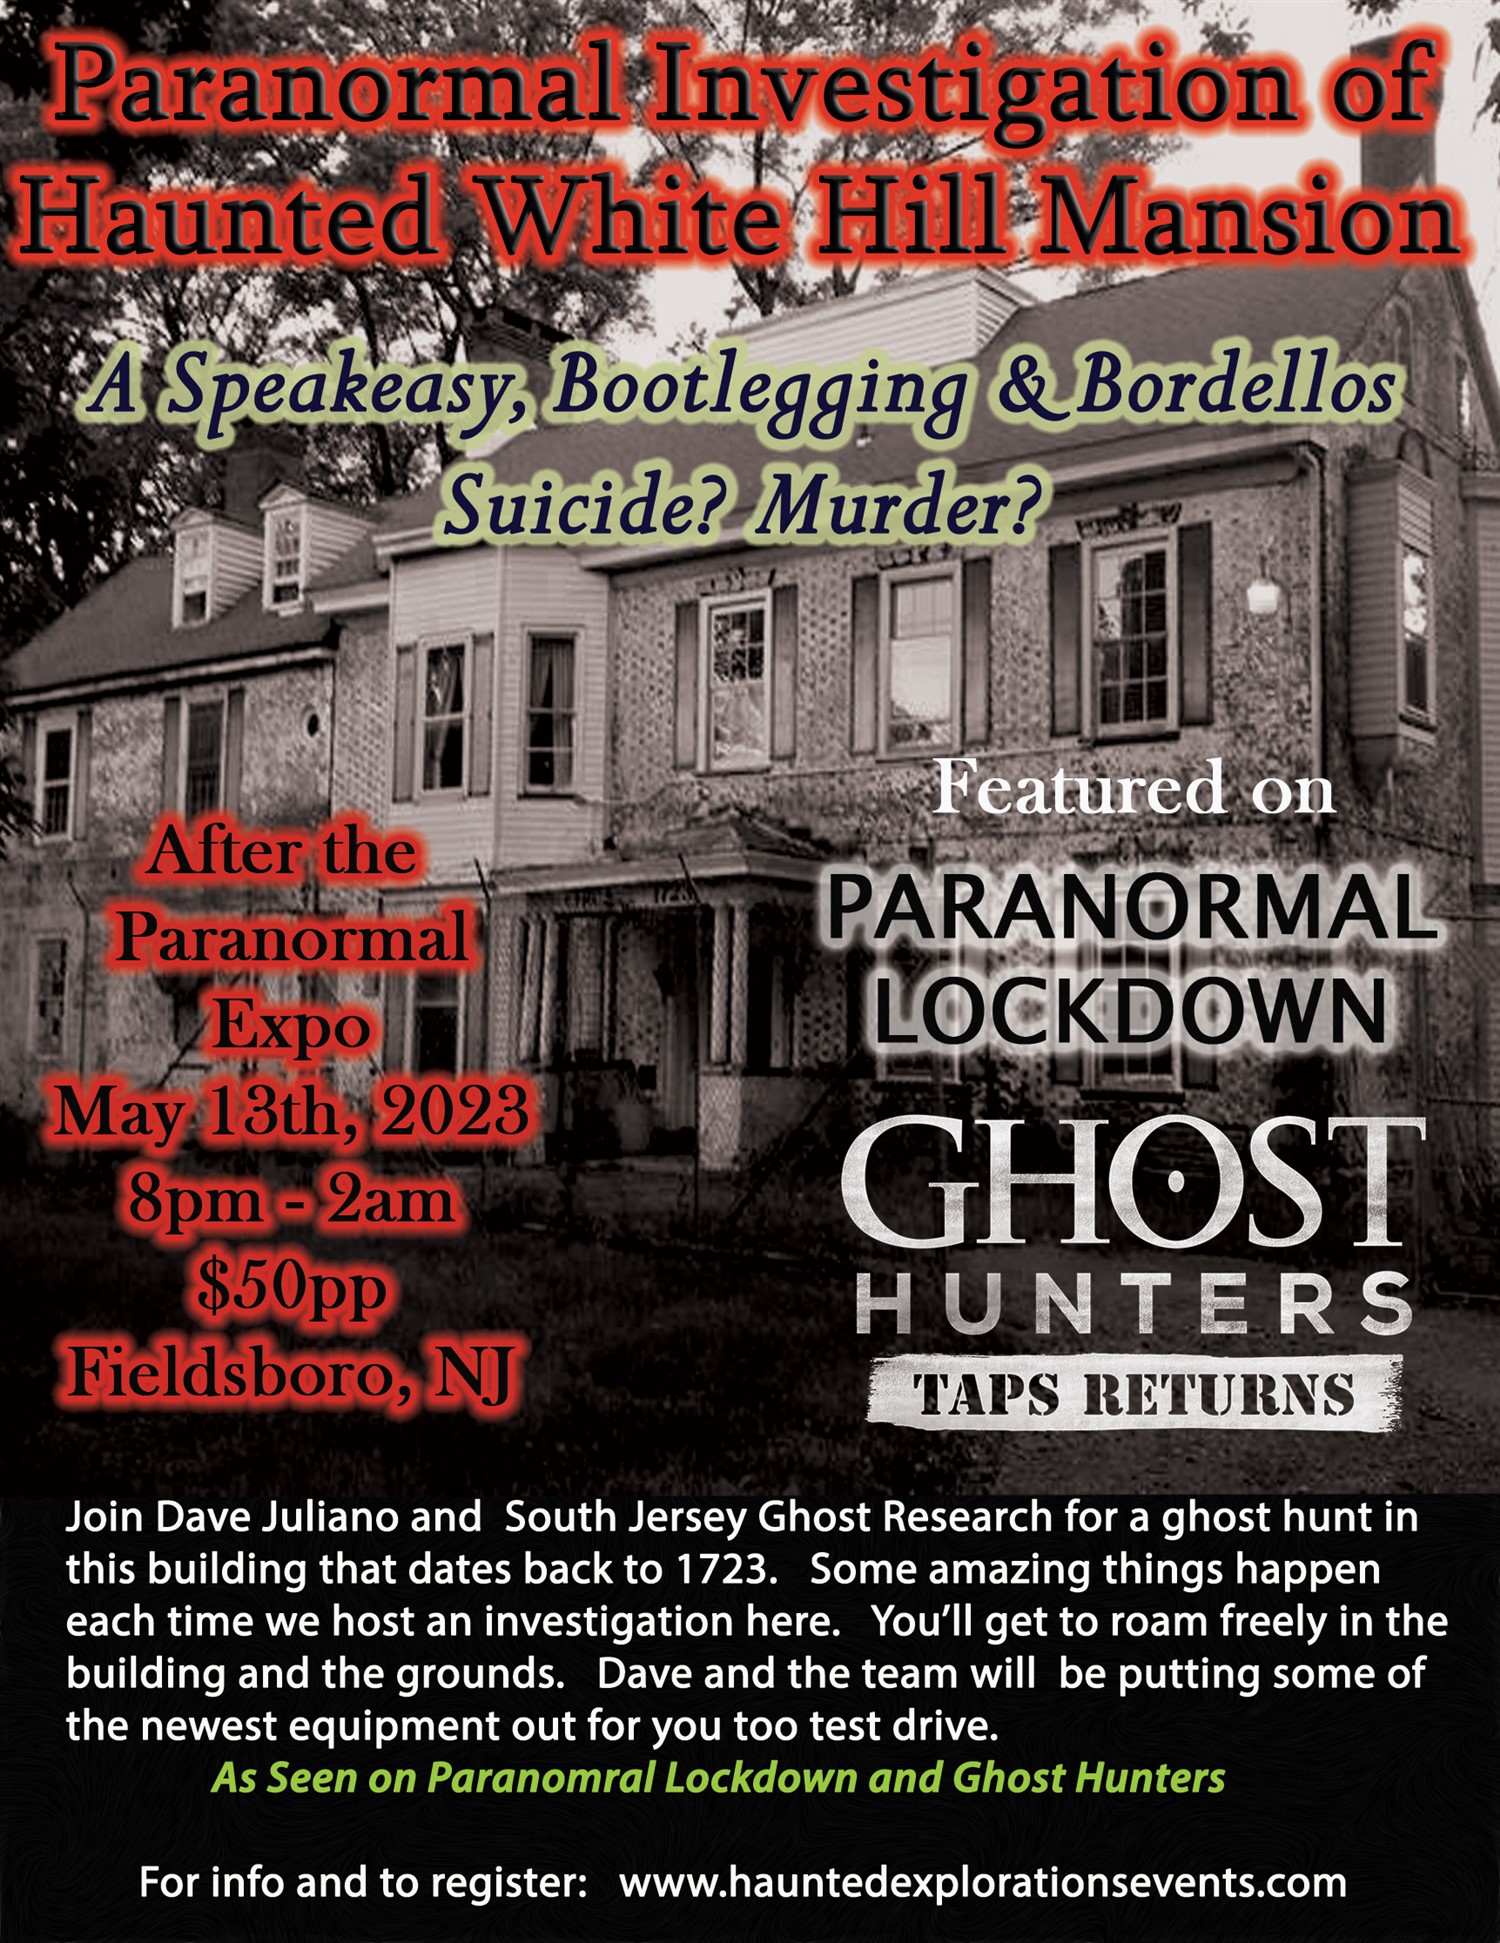 Investigate Whitehill Mansion After the Paranormal Expo on mai 13, 20:00@Whitehill Mansion - Achetez des billets et obtenez des informations surThriller Events thriller.events